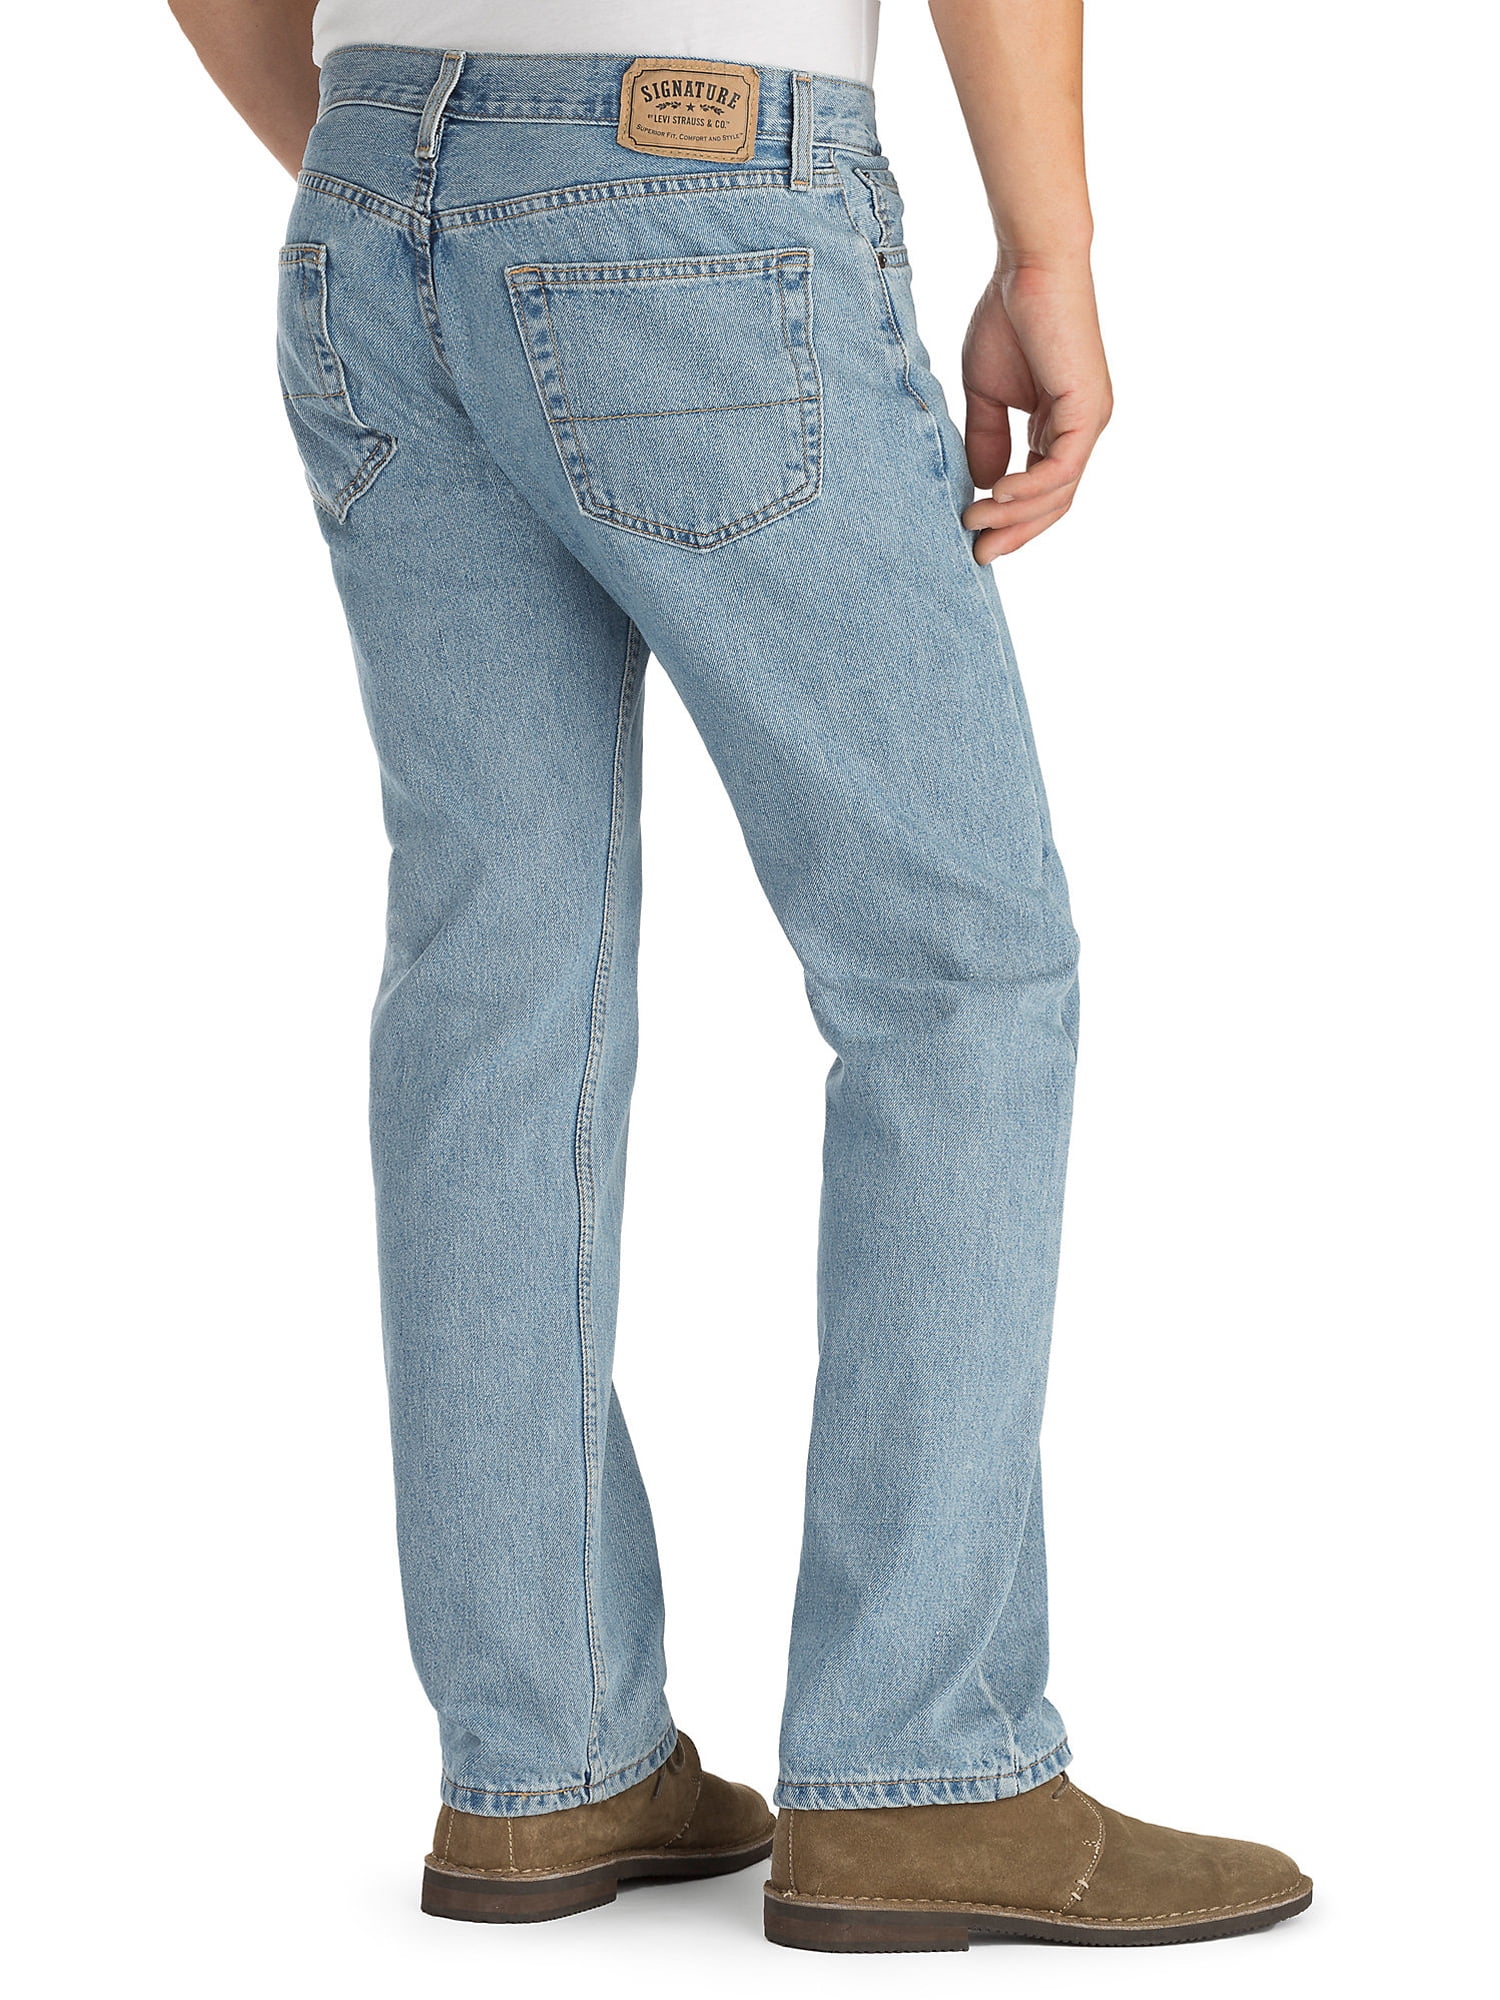 Levi's - Men Fit Guide | Mens jeans guide, Capsule wardrobe men, Mens jeans  fit